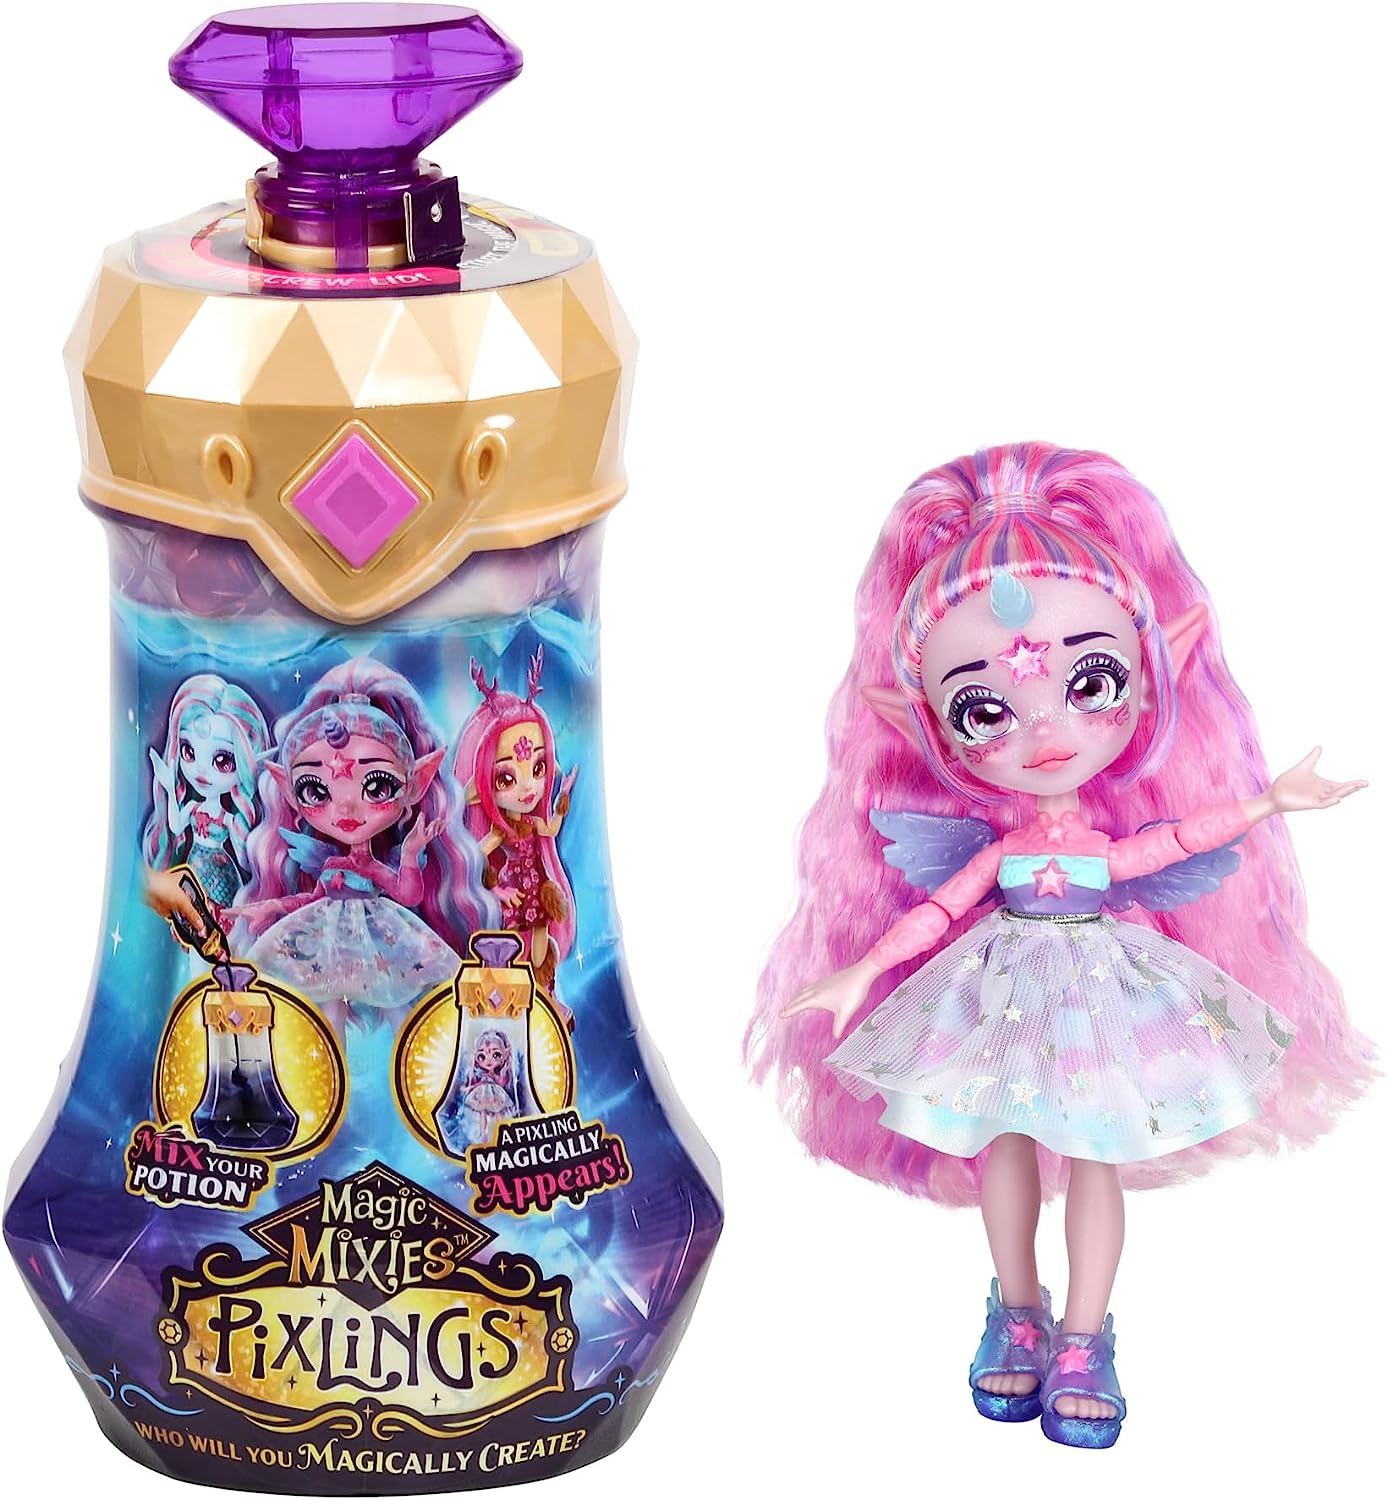 Magic Mixies Pixlings Unia Doll [The Unicorn]